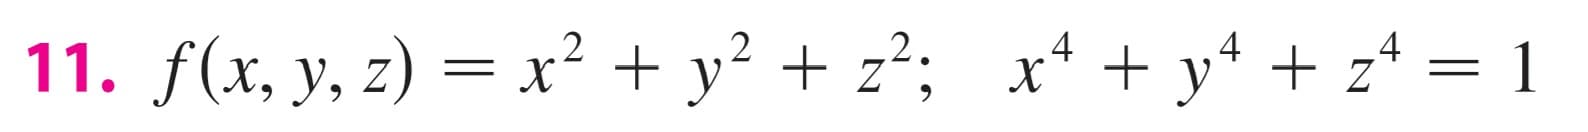 f (x, y, z)
) = x² + y² + z²; x* + y* + z* = 1
2.
4
||
||
